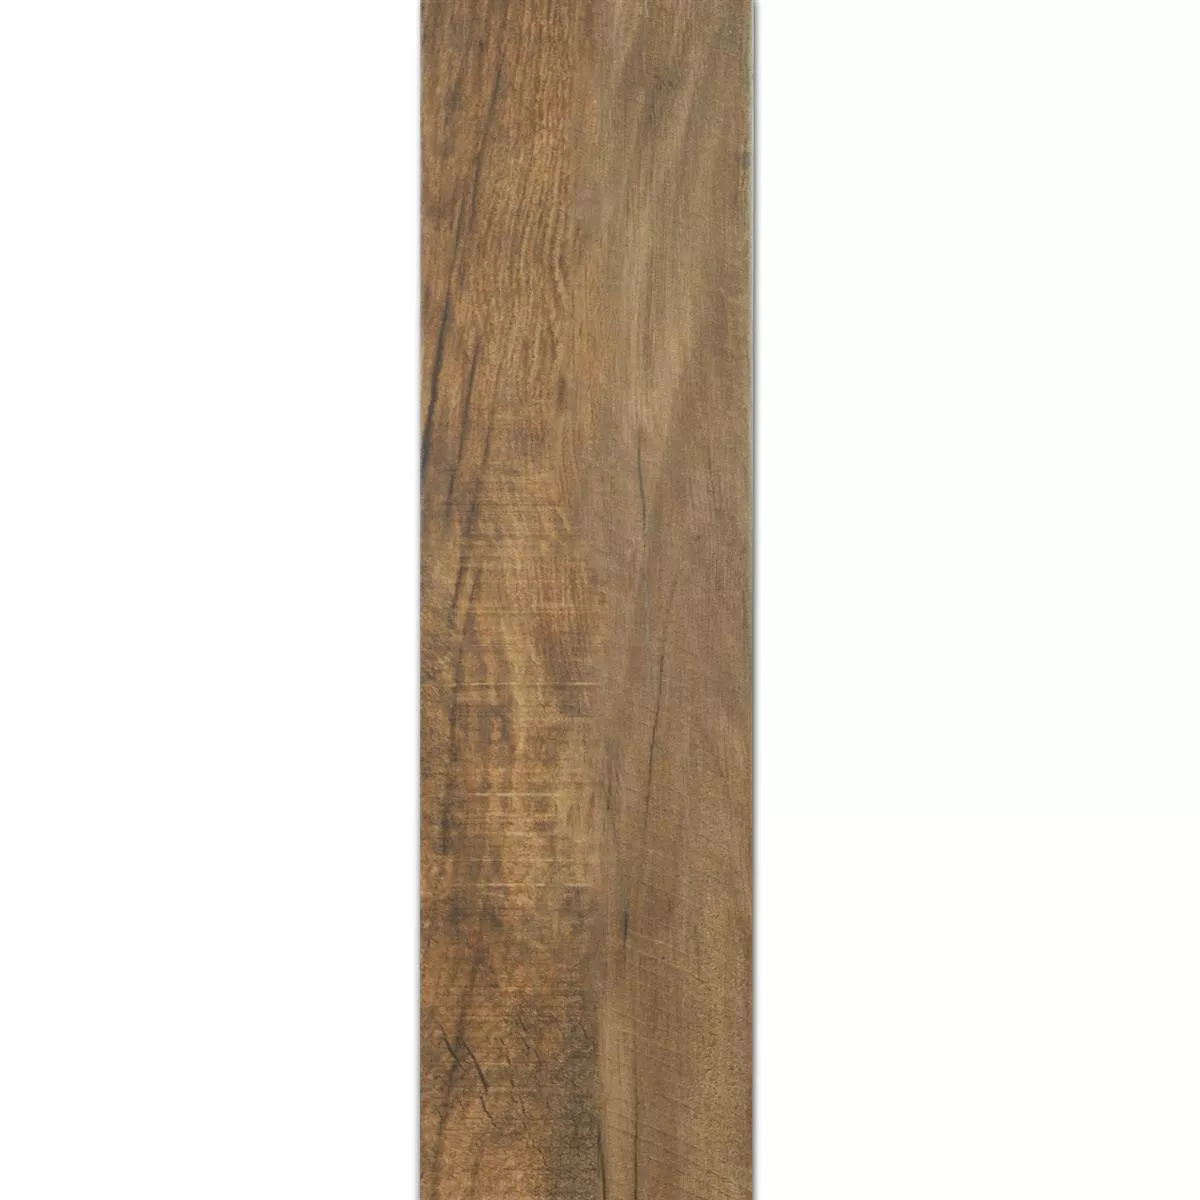 Próbka Wygląd Drewna Płytki Podłogowe Palaimon Honey 15x90cm